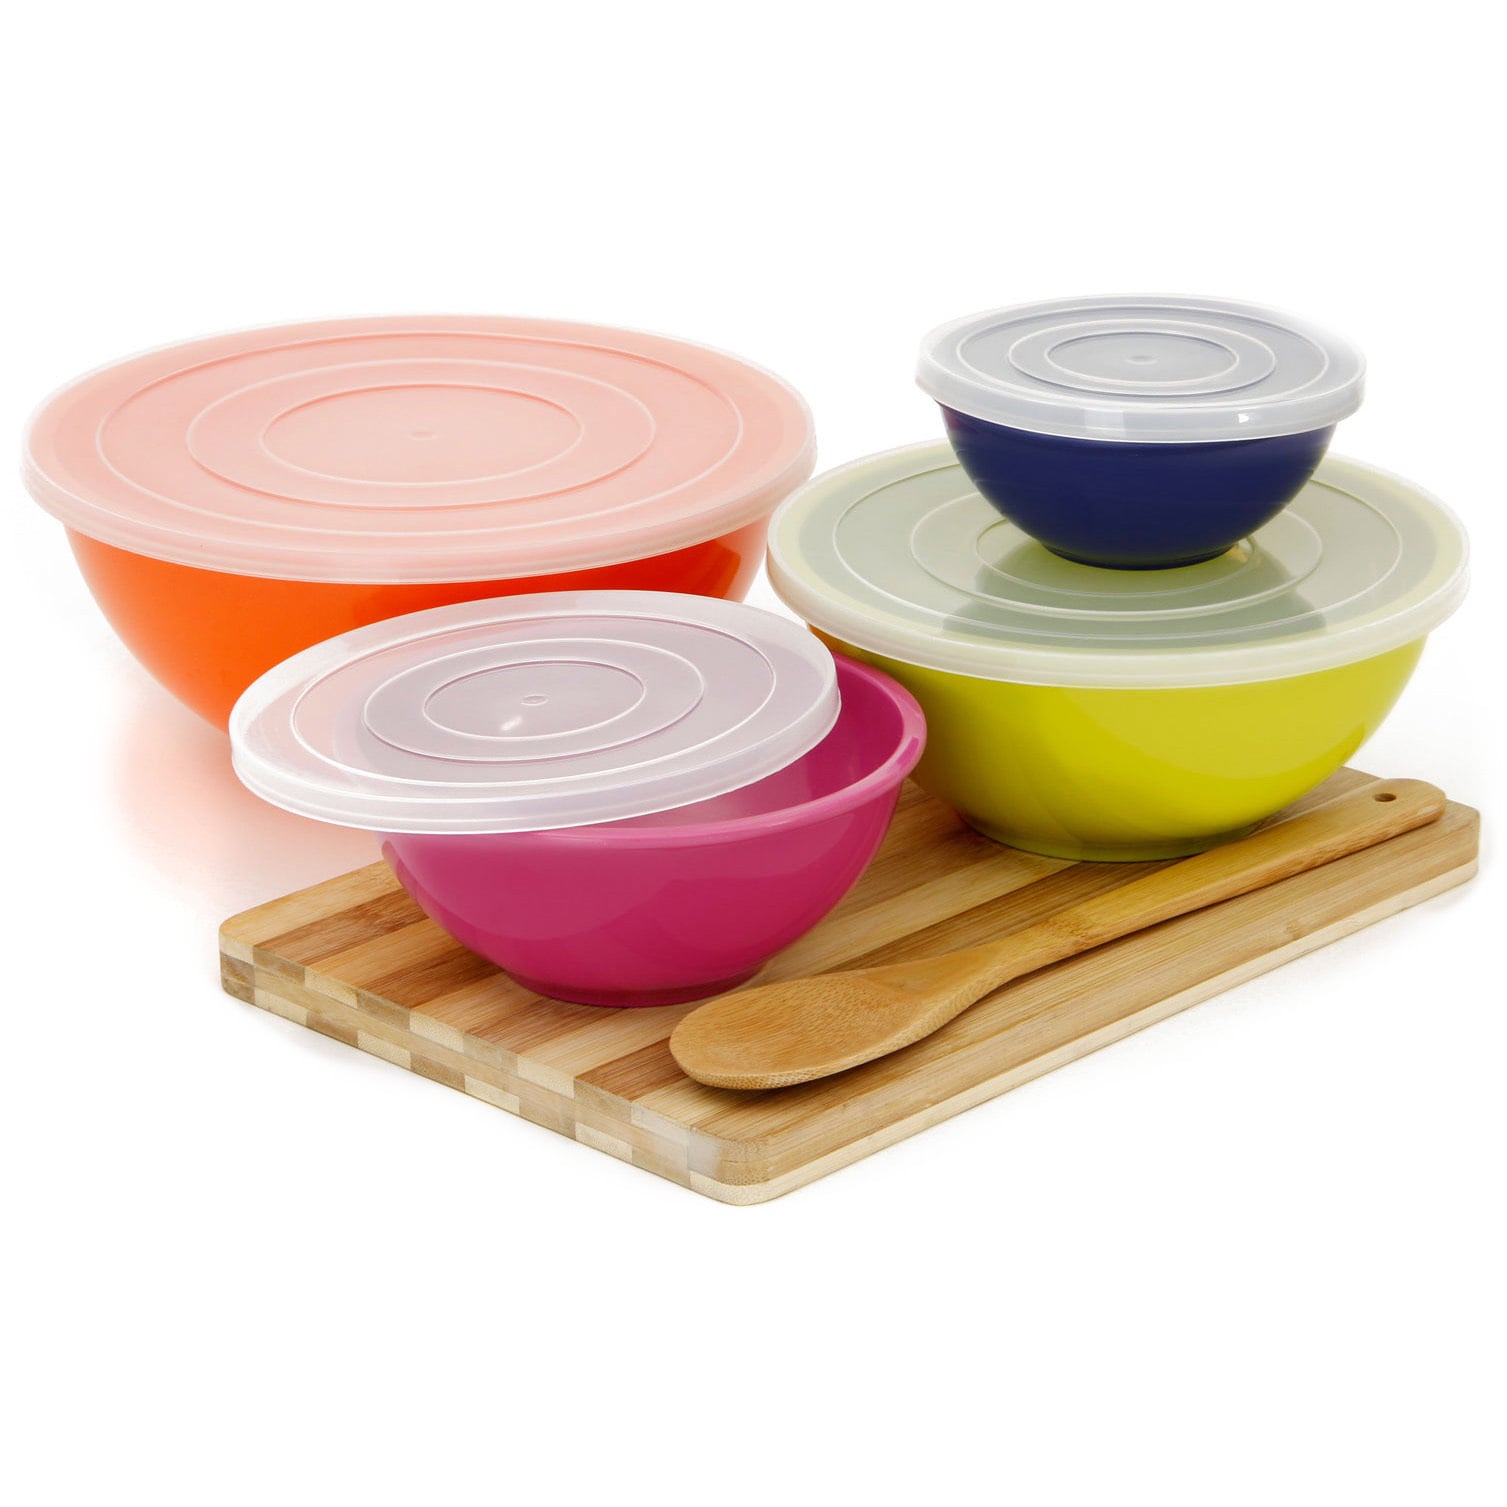 Details about   4 Piece Melamine Mixing Bowl Set With Lids Multi-color BPA Free Dishwasher Safe 